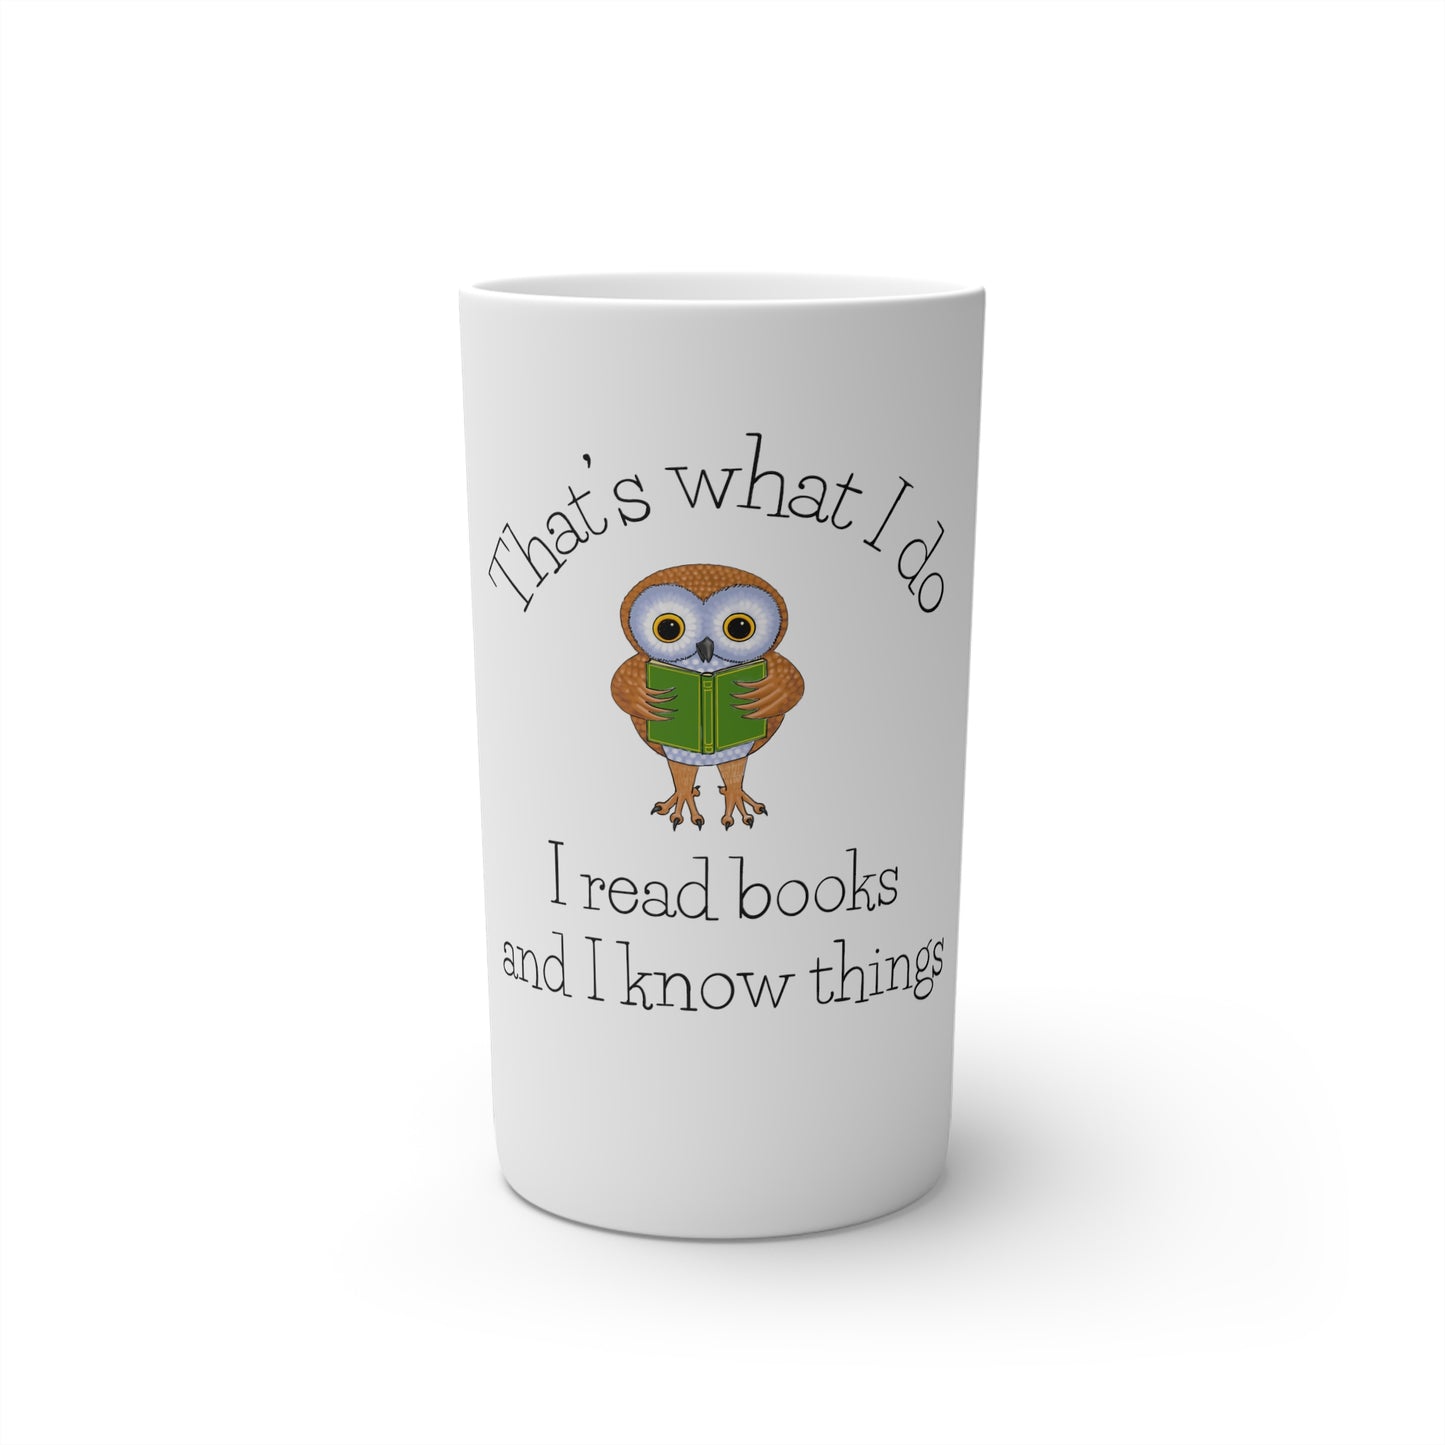 I Read Books and I know Things Conical Coffee Mugs (3oz, 8oz, 12oz)